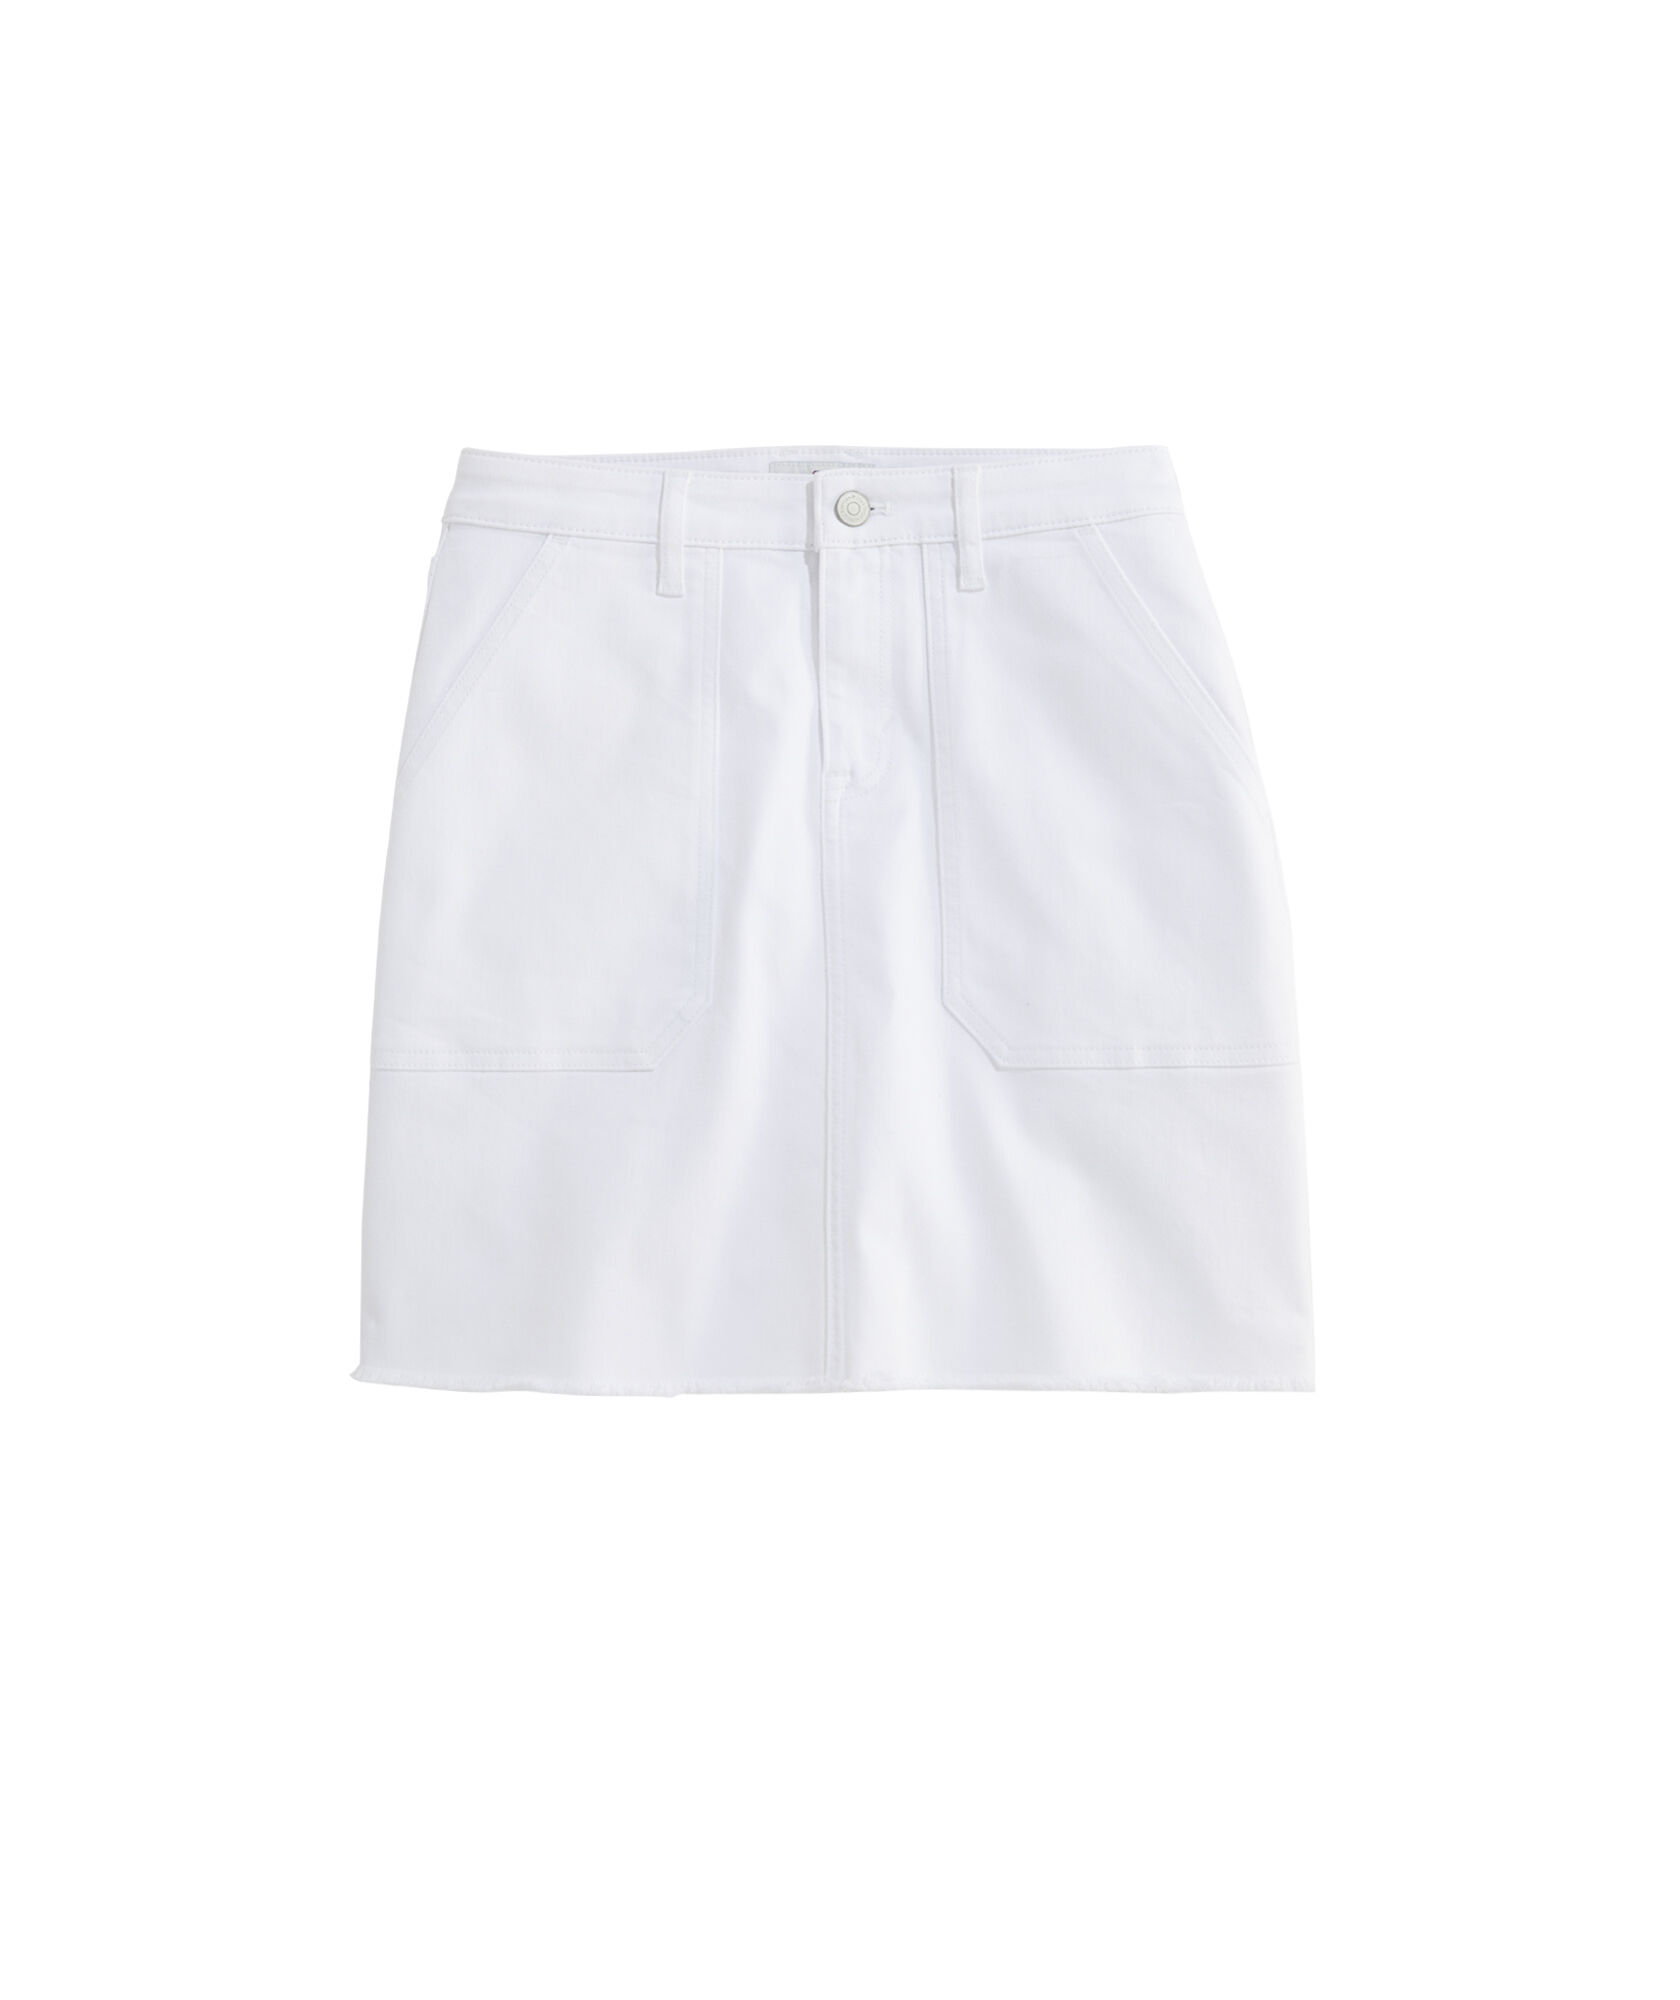 OUTLET Patch Pocket White Denim Skirt